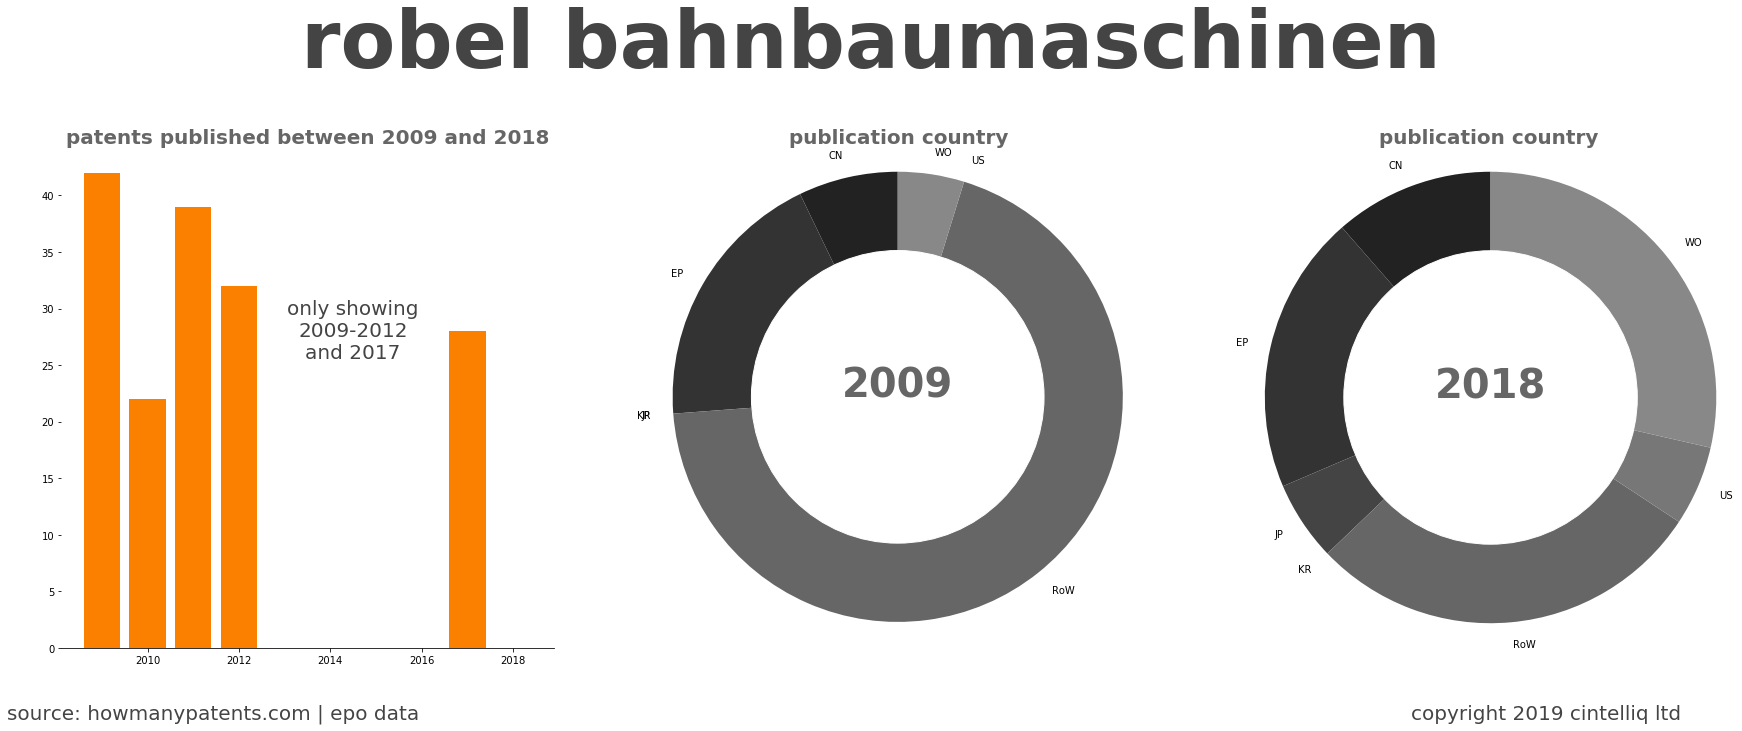 summary of patents for Robel Bahnbaumaschinen